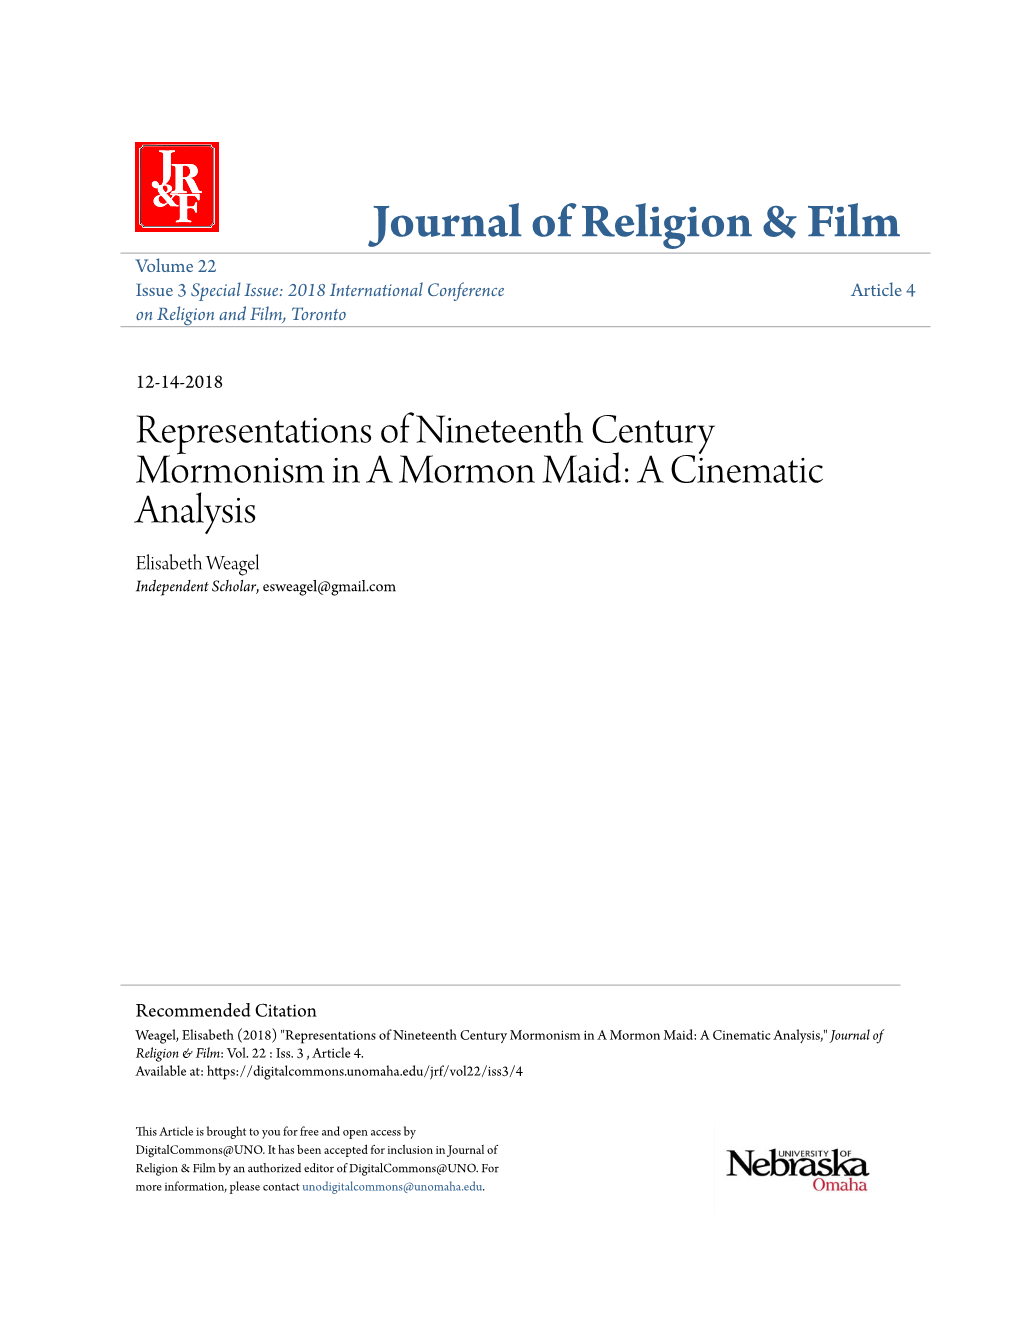 Representations of Nineteenth Century Mormonism in a Mormon Maid: a Cinematic Analysis Elisabeth Weagel Independent Scholar, Esweagel@Gmail.Com